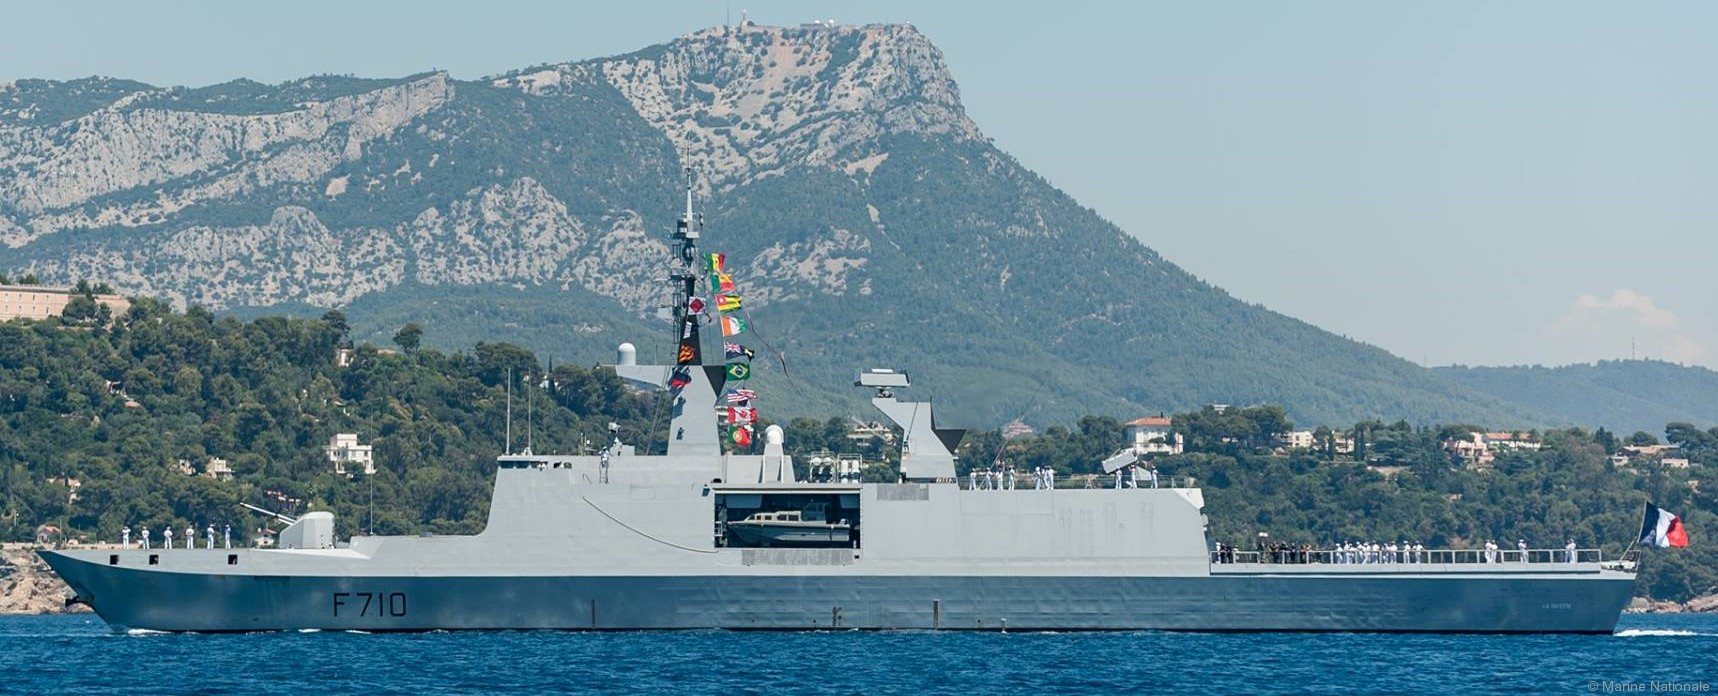 f-710 fs la fayette class frigate french navy marine nationale 06